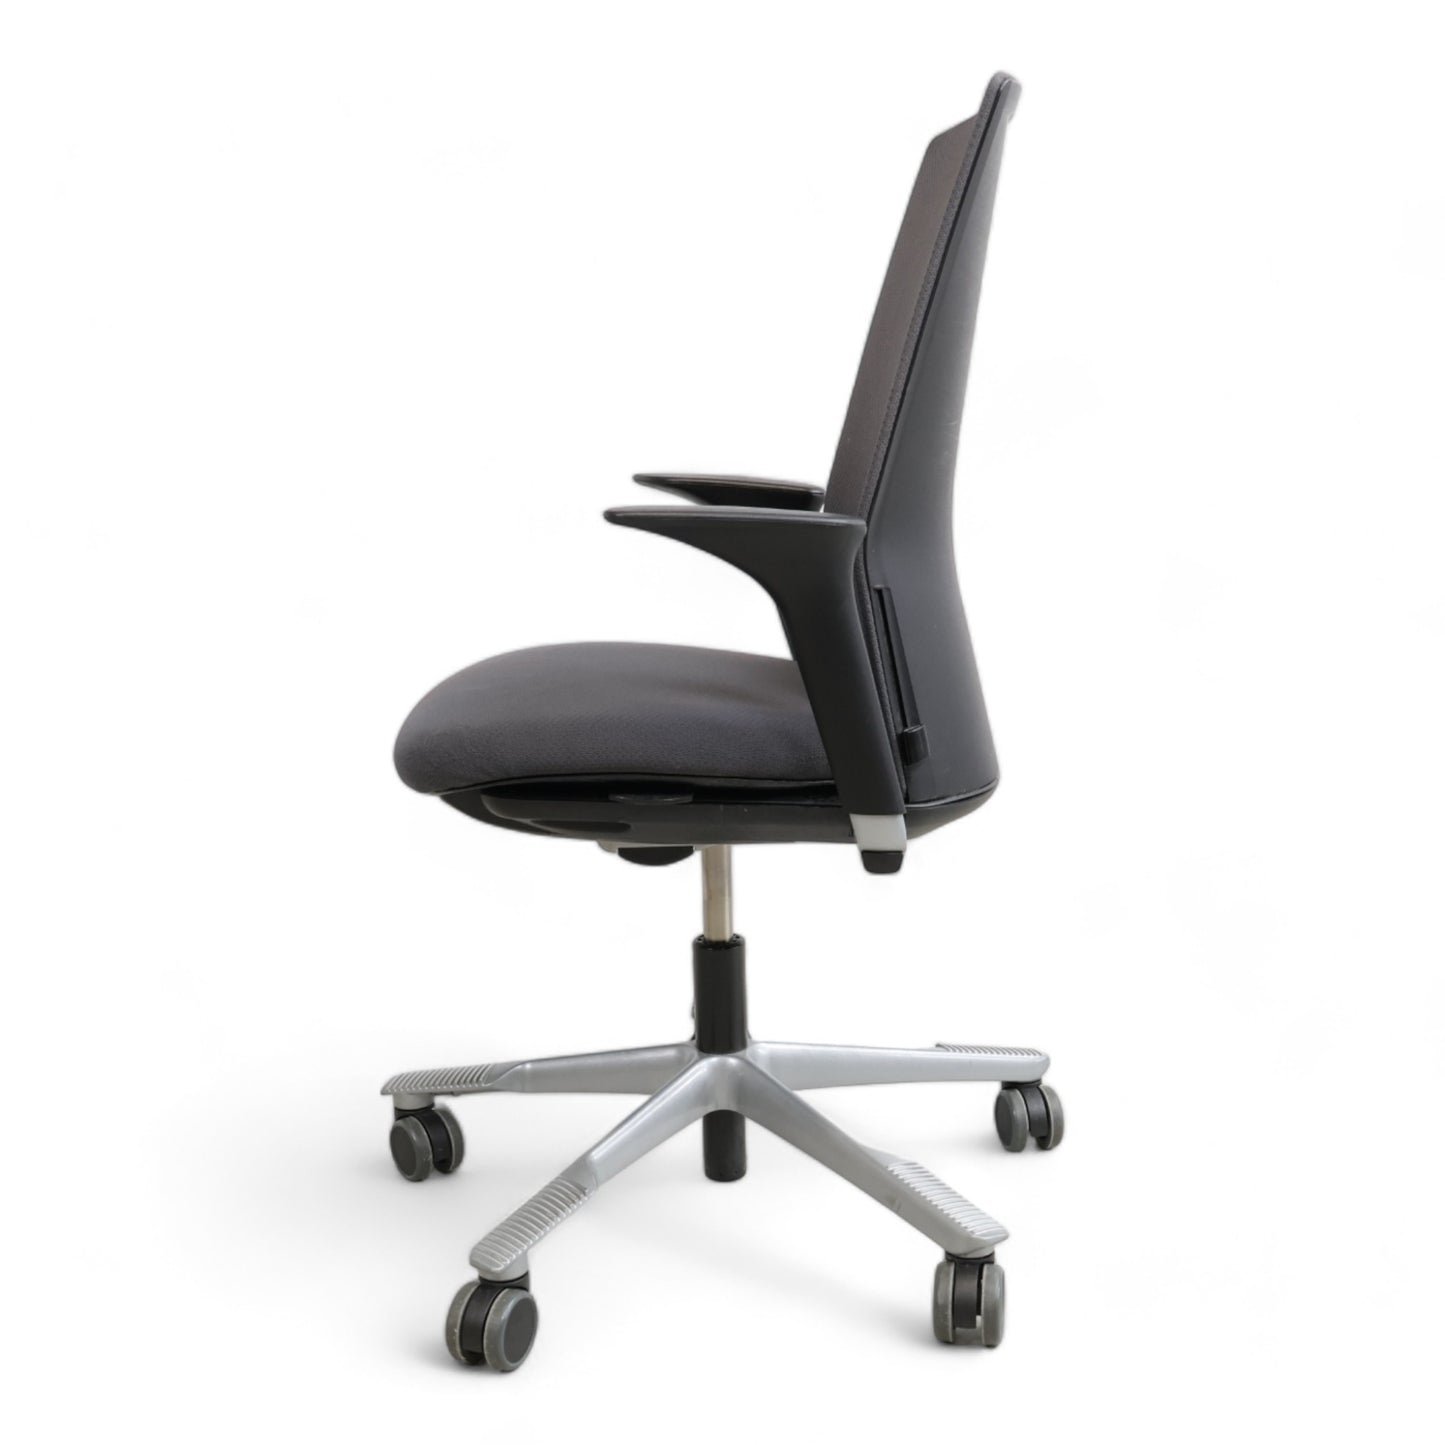 Nyrenset | Mørk grå HÅG Futu kontorstol med justerbar sittehøyde